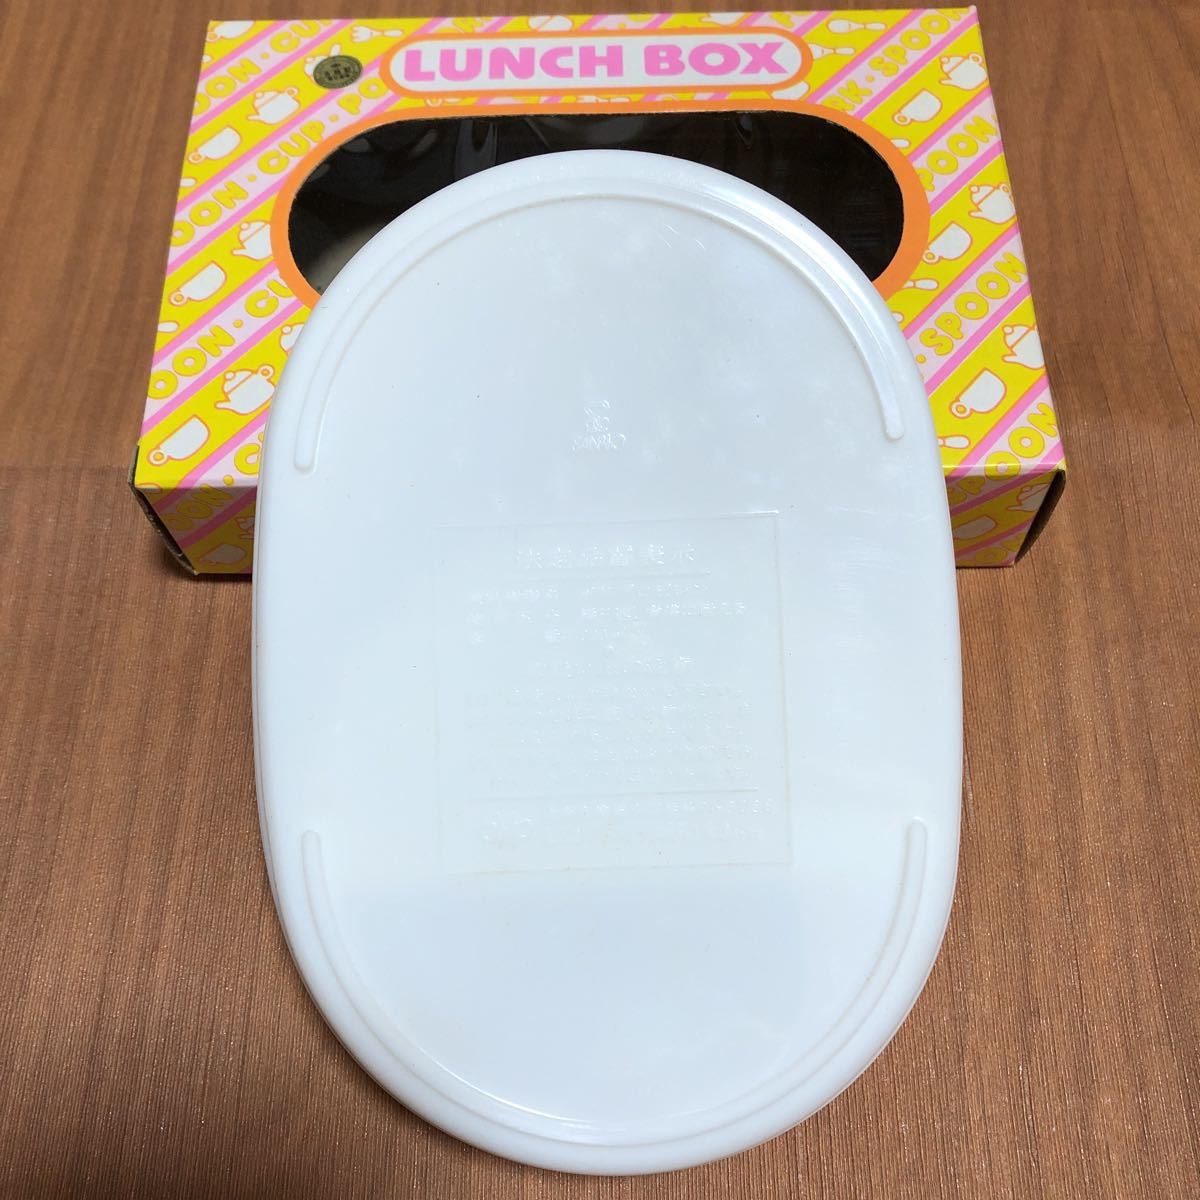  Kitty * Hello Kitty *. lunch box *1976 year * Sanrio * Showa Retro that time thing * unused storage goods * rare 